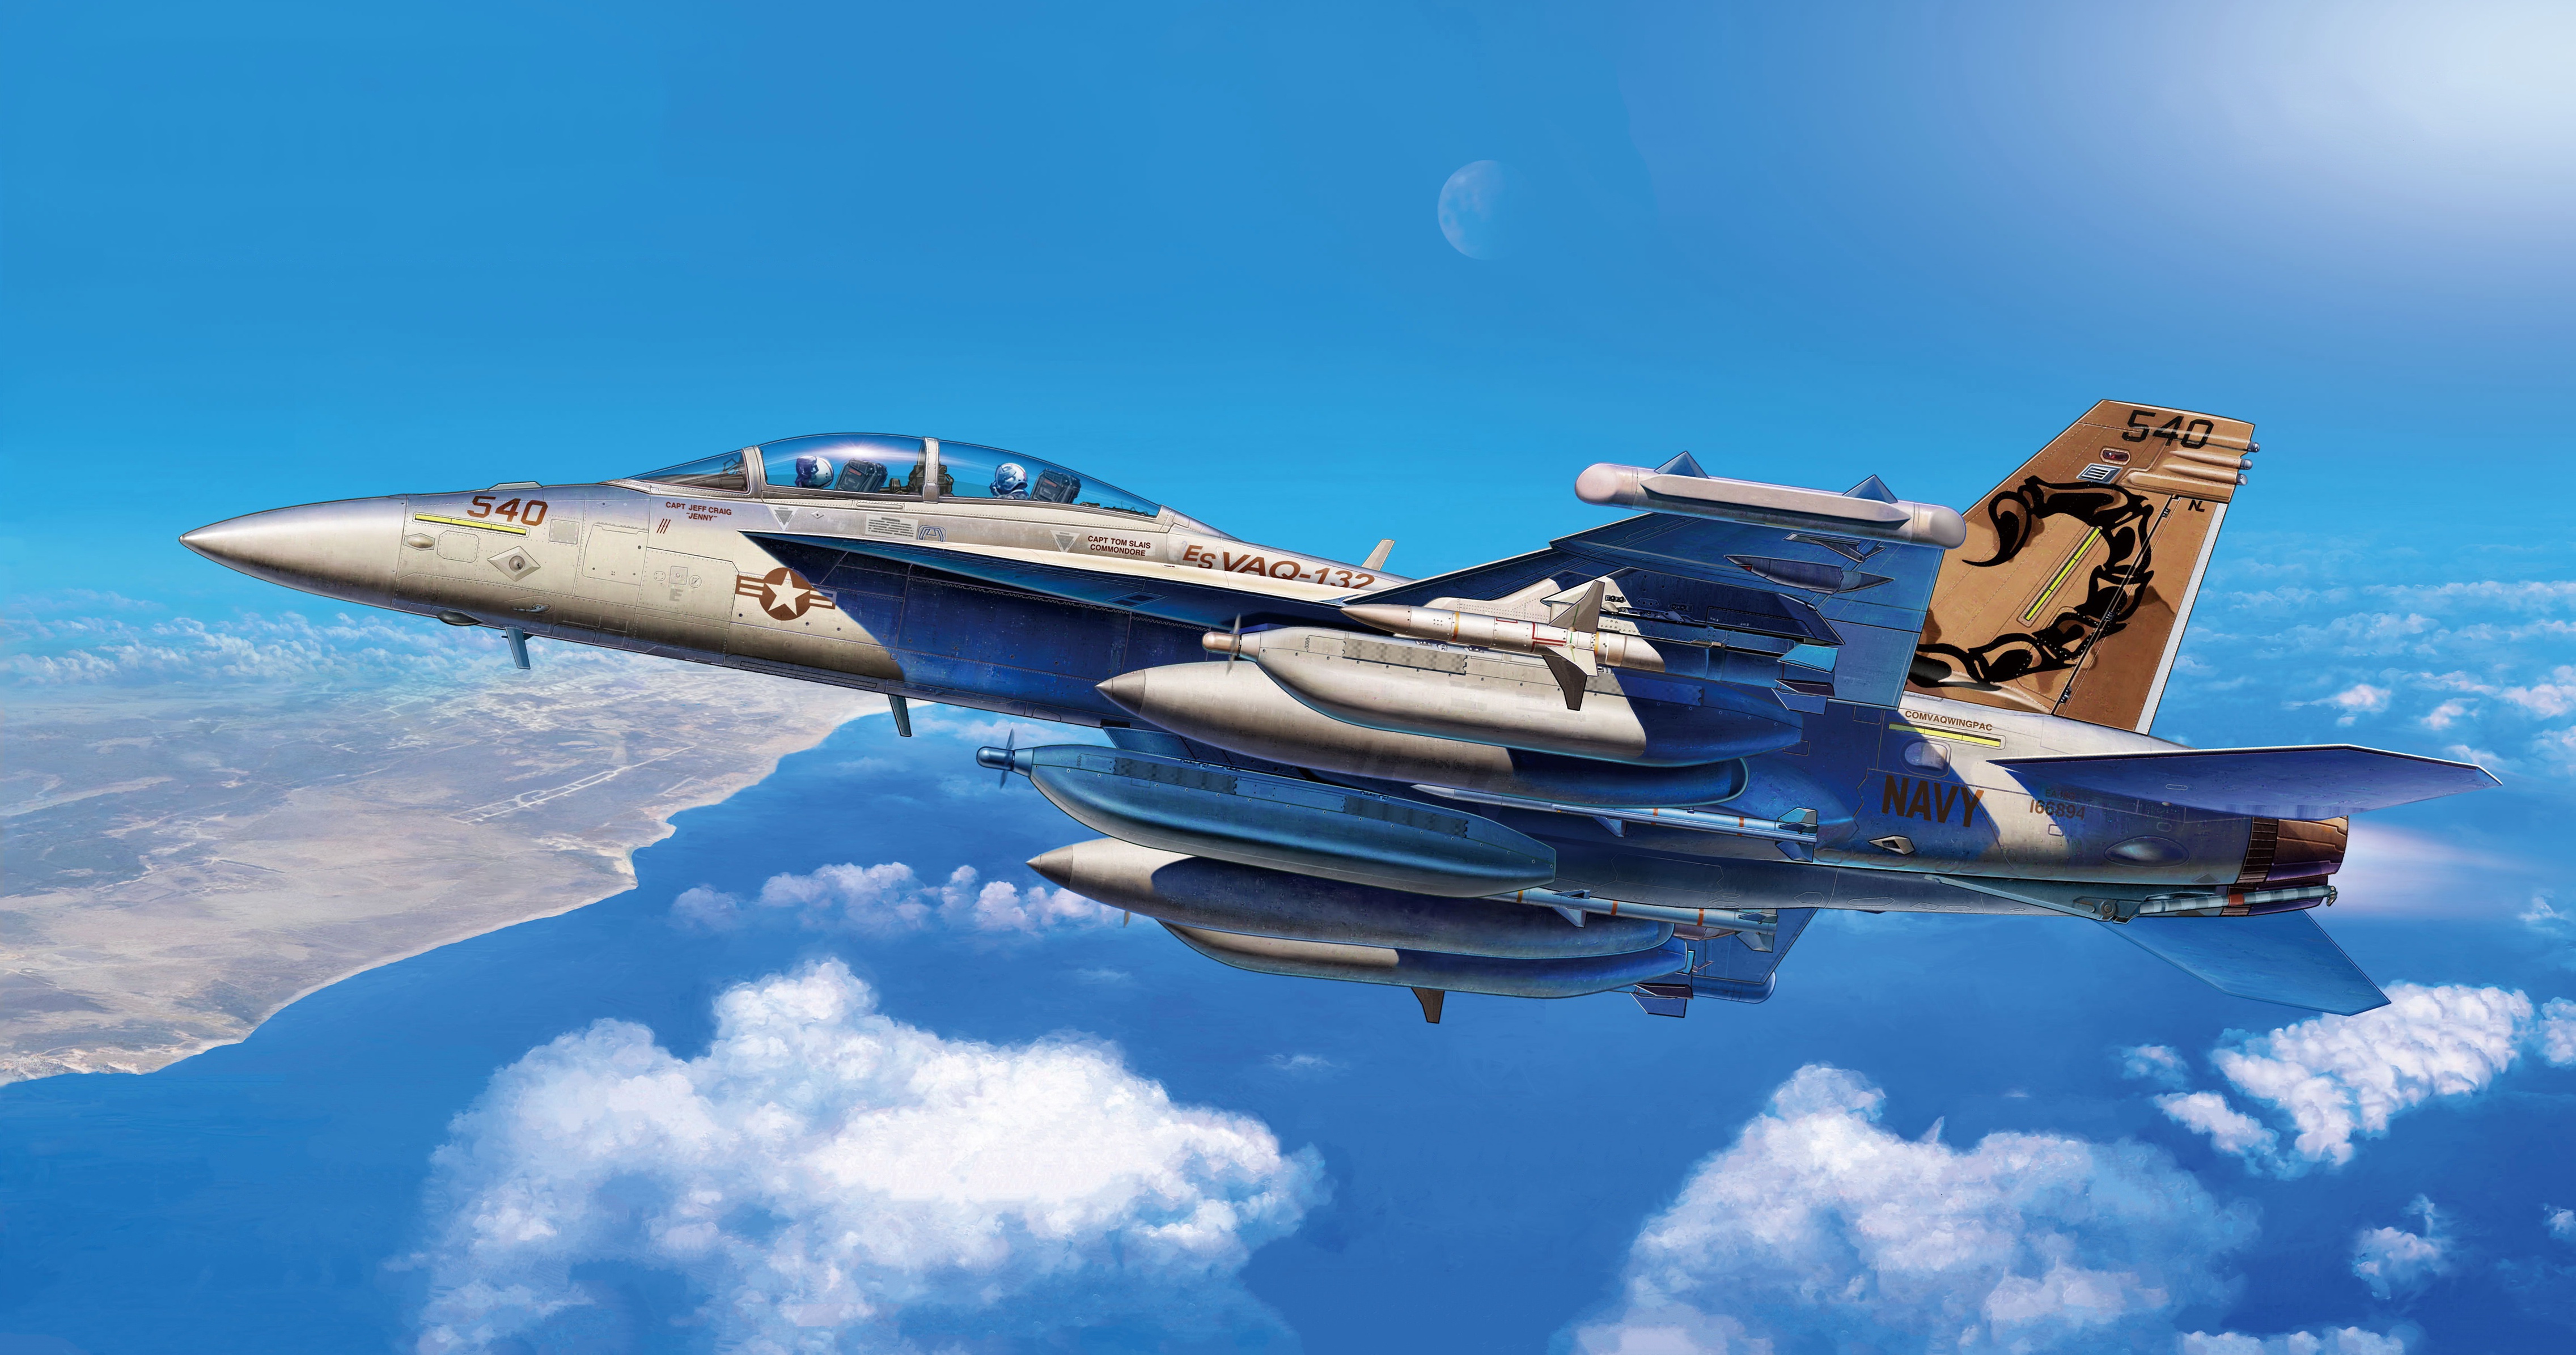 jet fighter game wallpaper